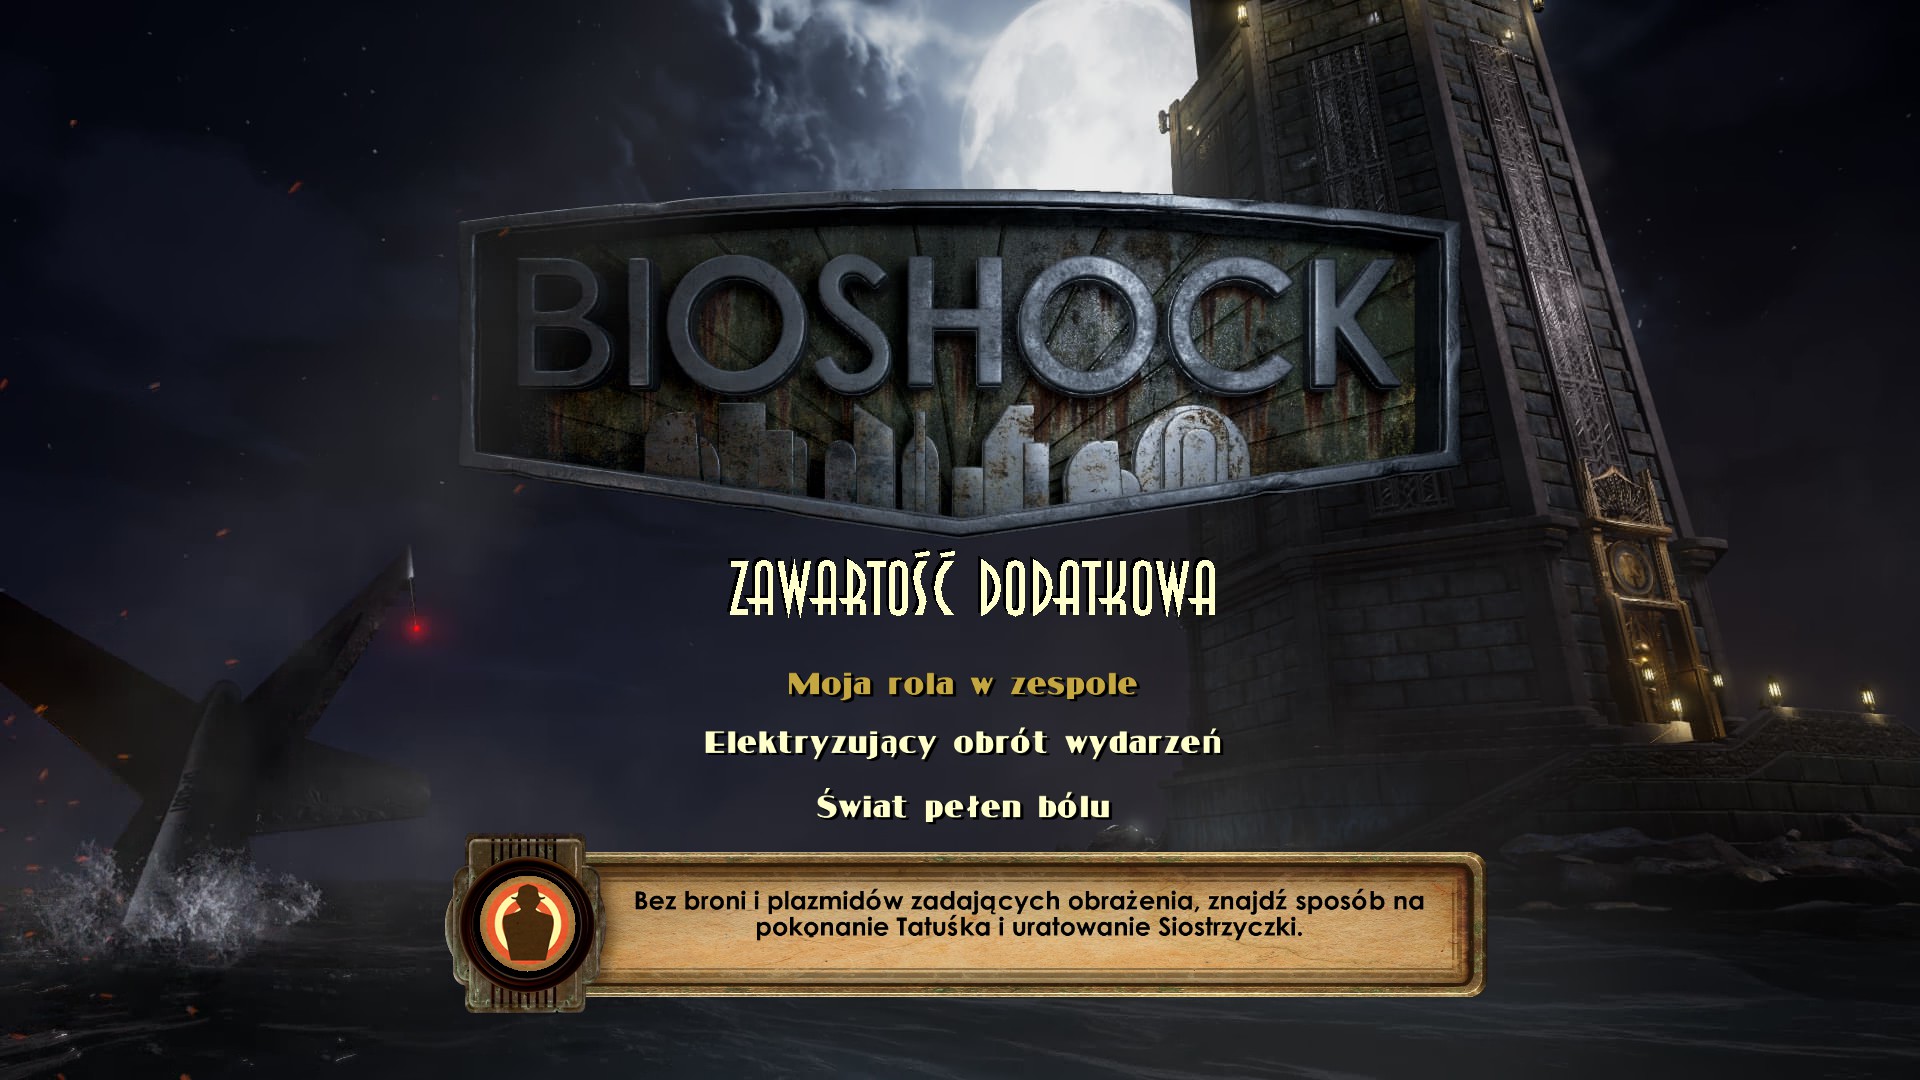 Bioshock remastered русификатор звука. Bioshock Remastered Mods. Bioshock Джек большой папочка. Bioshock Remastered достижения Steam гайд. Bioshock Remastered не запускается Steam.